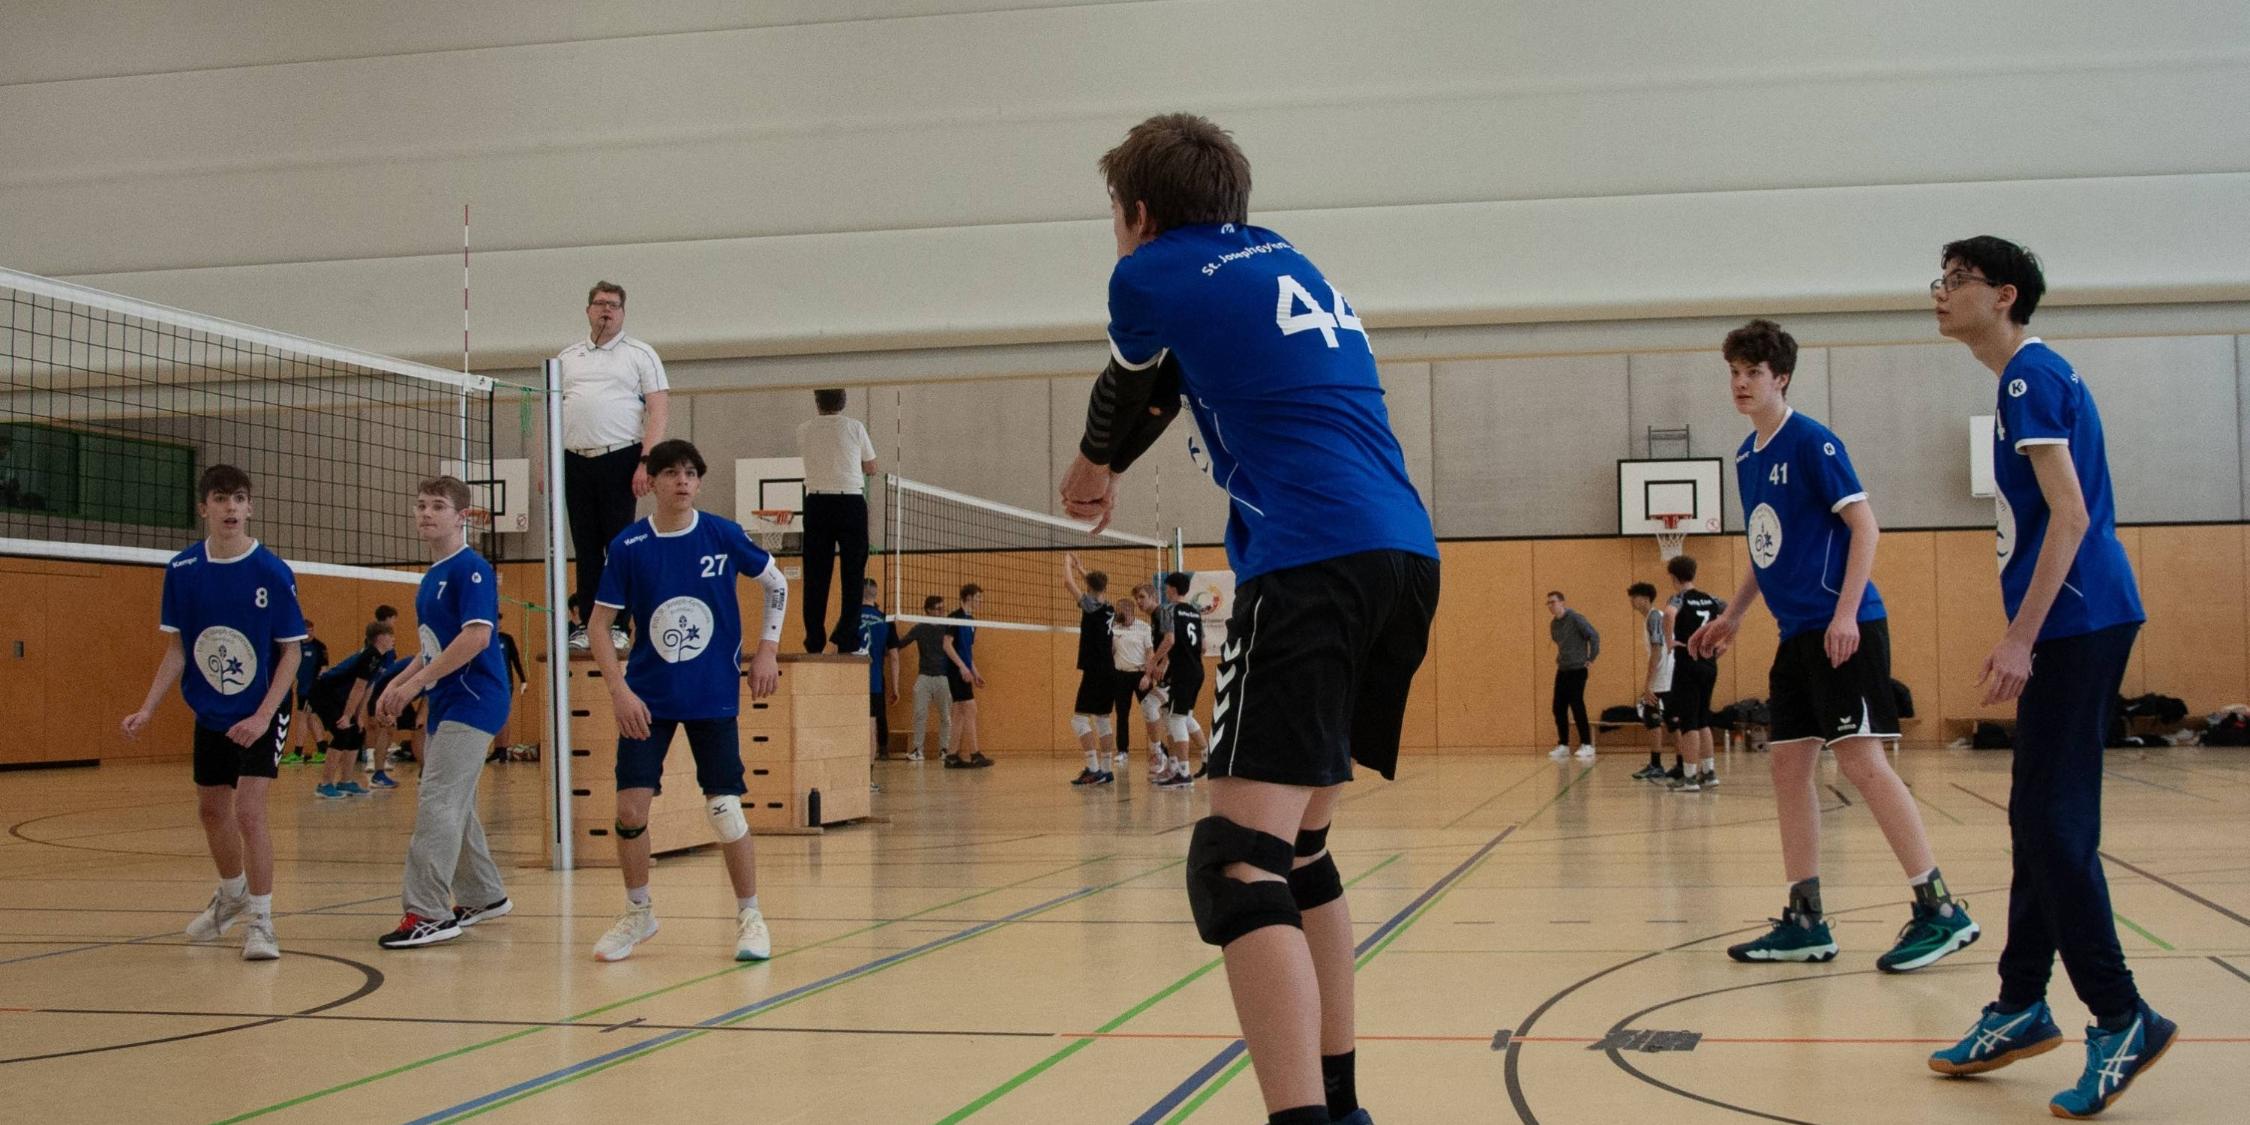 Jungen spielen Volleyball